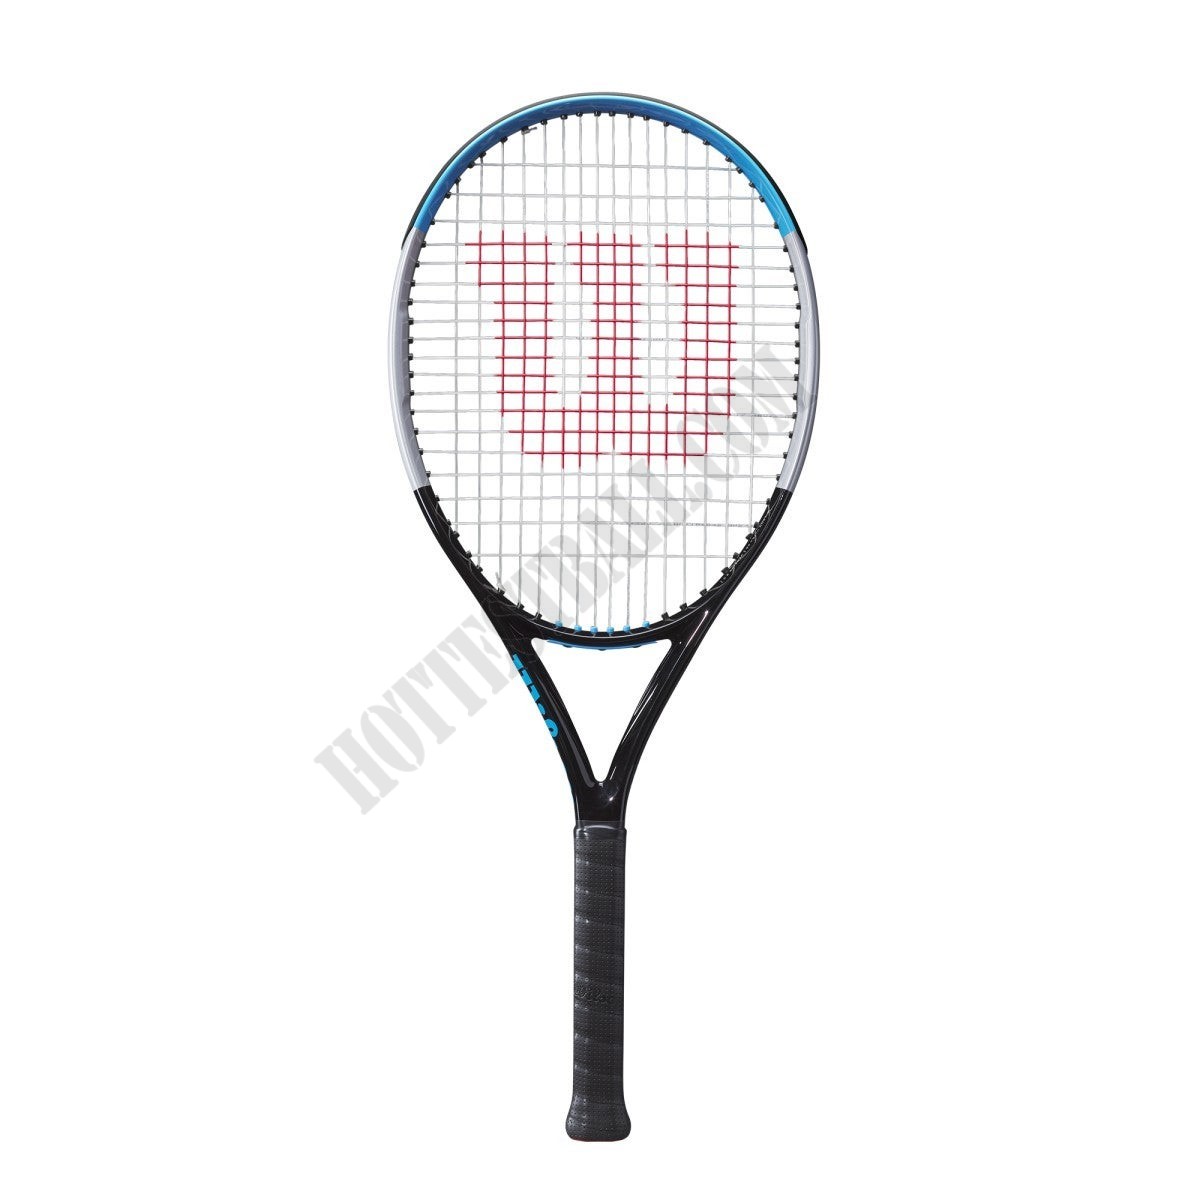 Ultra 25 v3 Tennis Racket - Wilson Discount Store - Ultra 25 v3 Tennis Racket - Wilson Discount Store